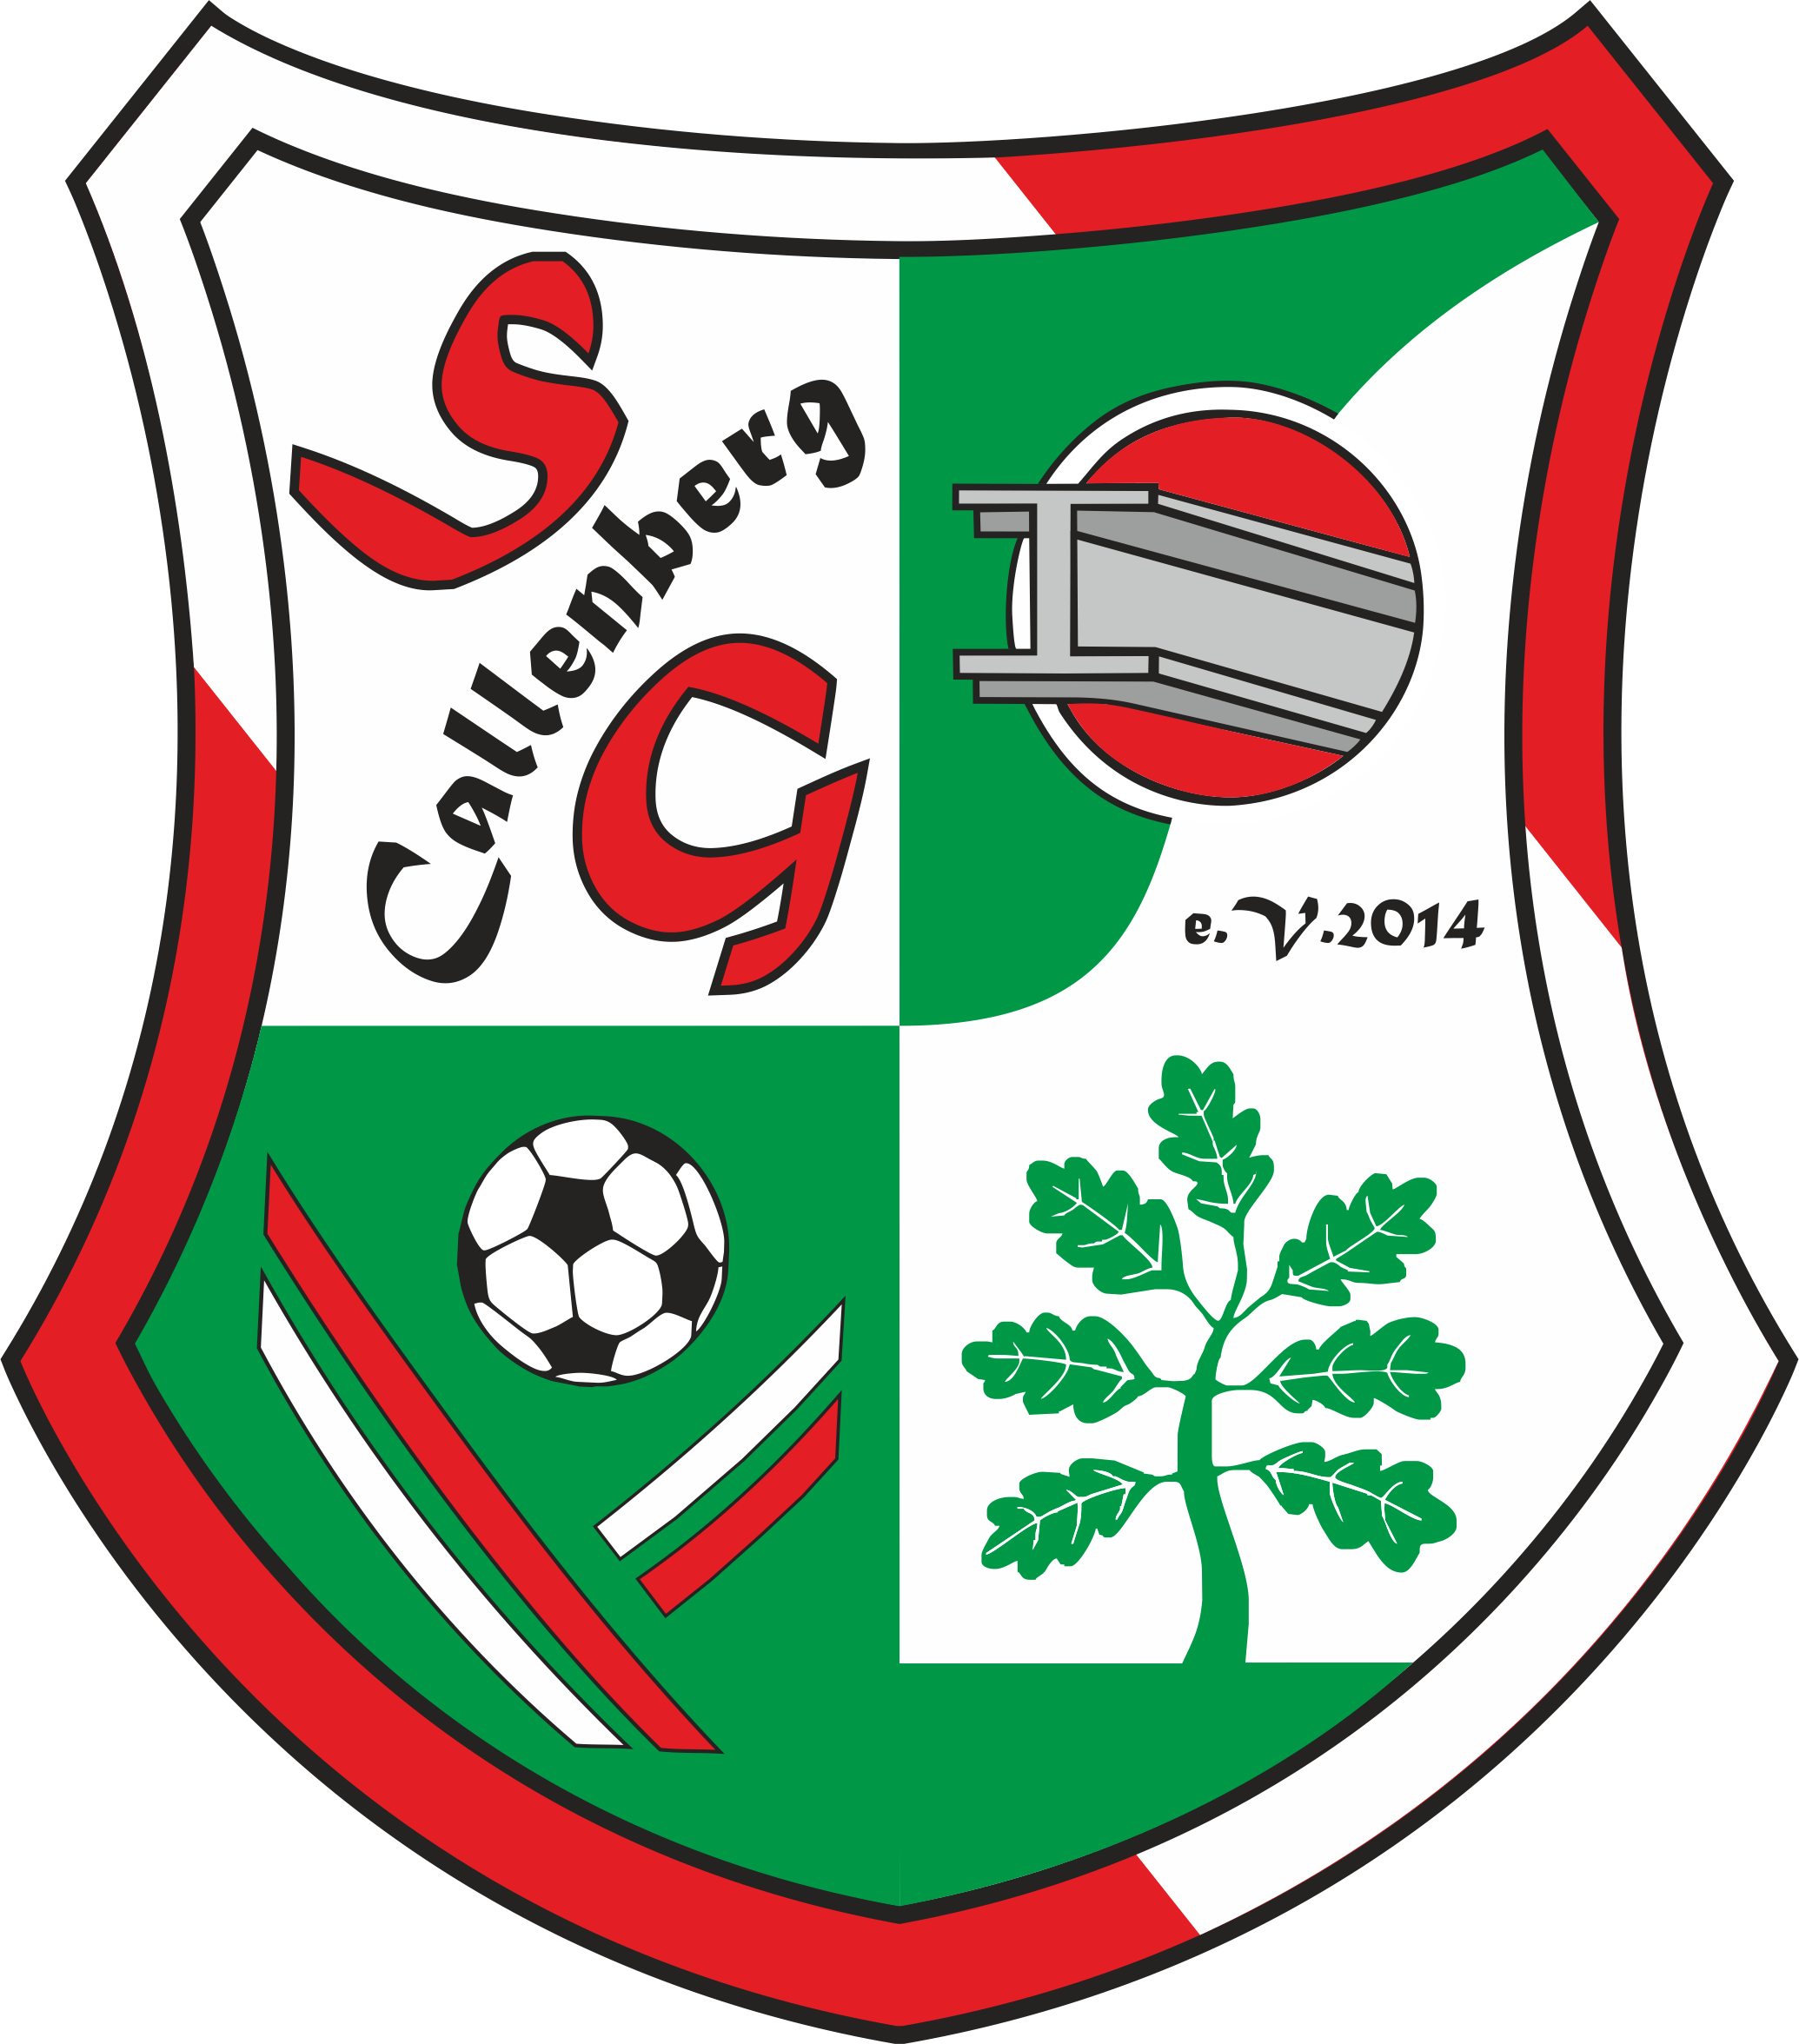 Wappen / Logo des Vereins SG Callenberg